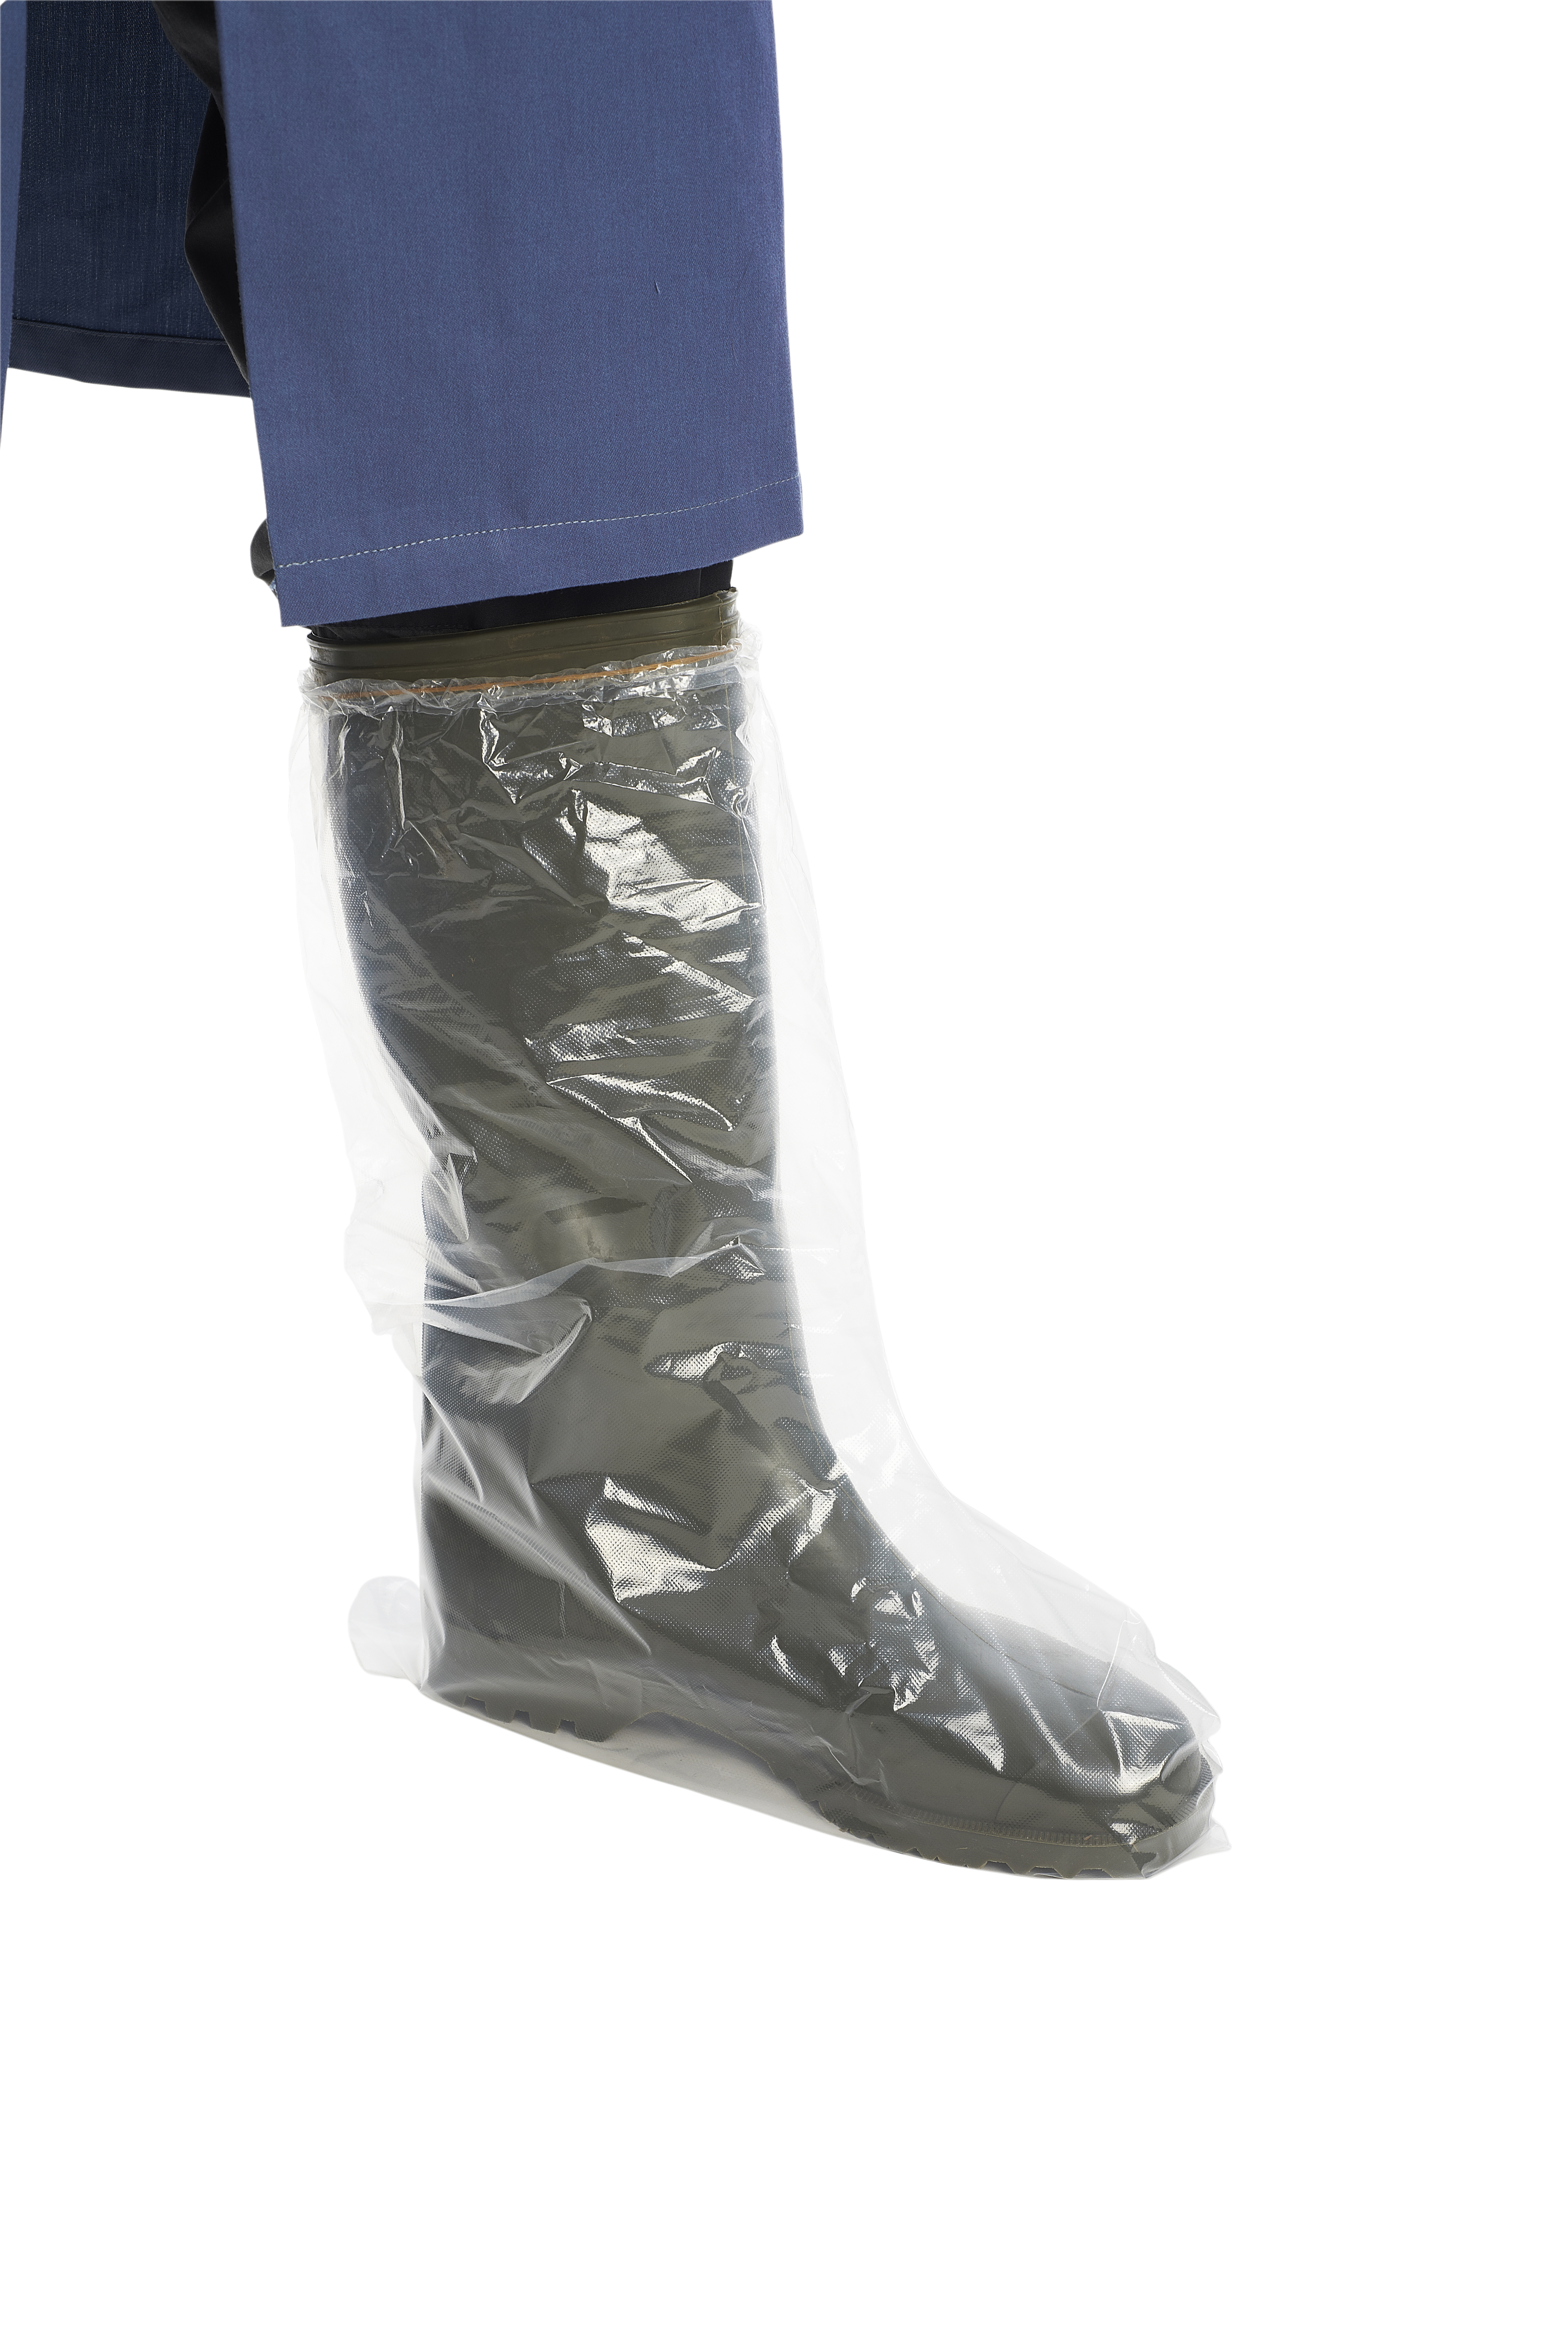 KRUTEX disp. boots, long/thick, elasticated top, 25 pairs